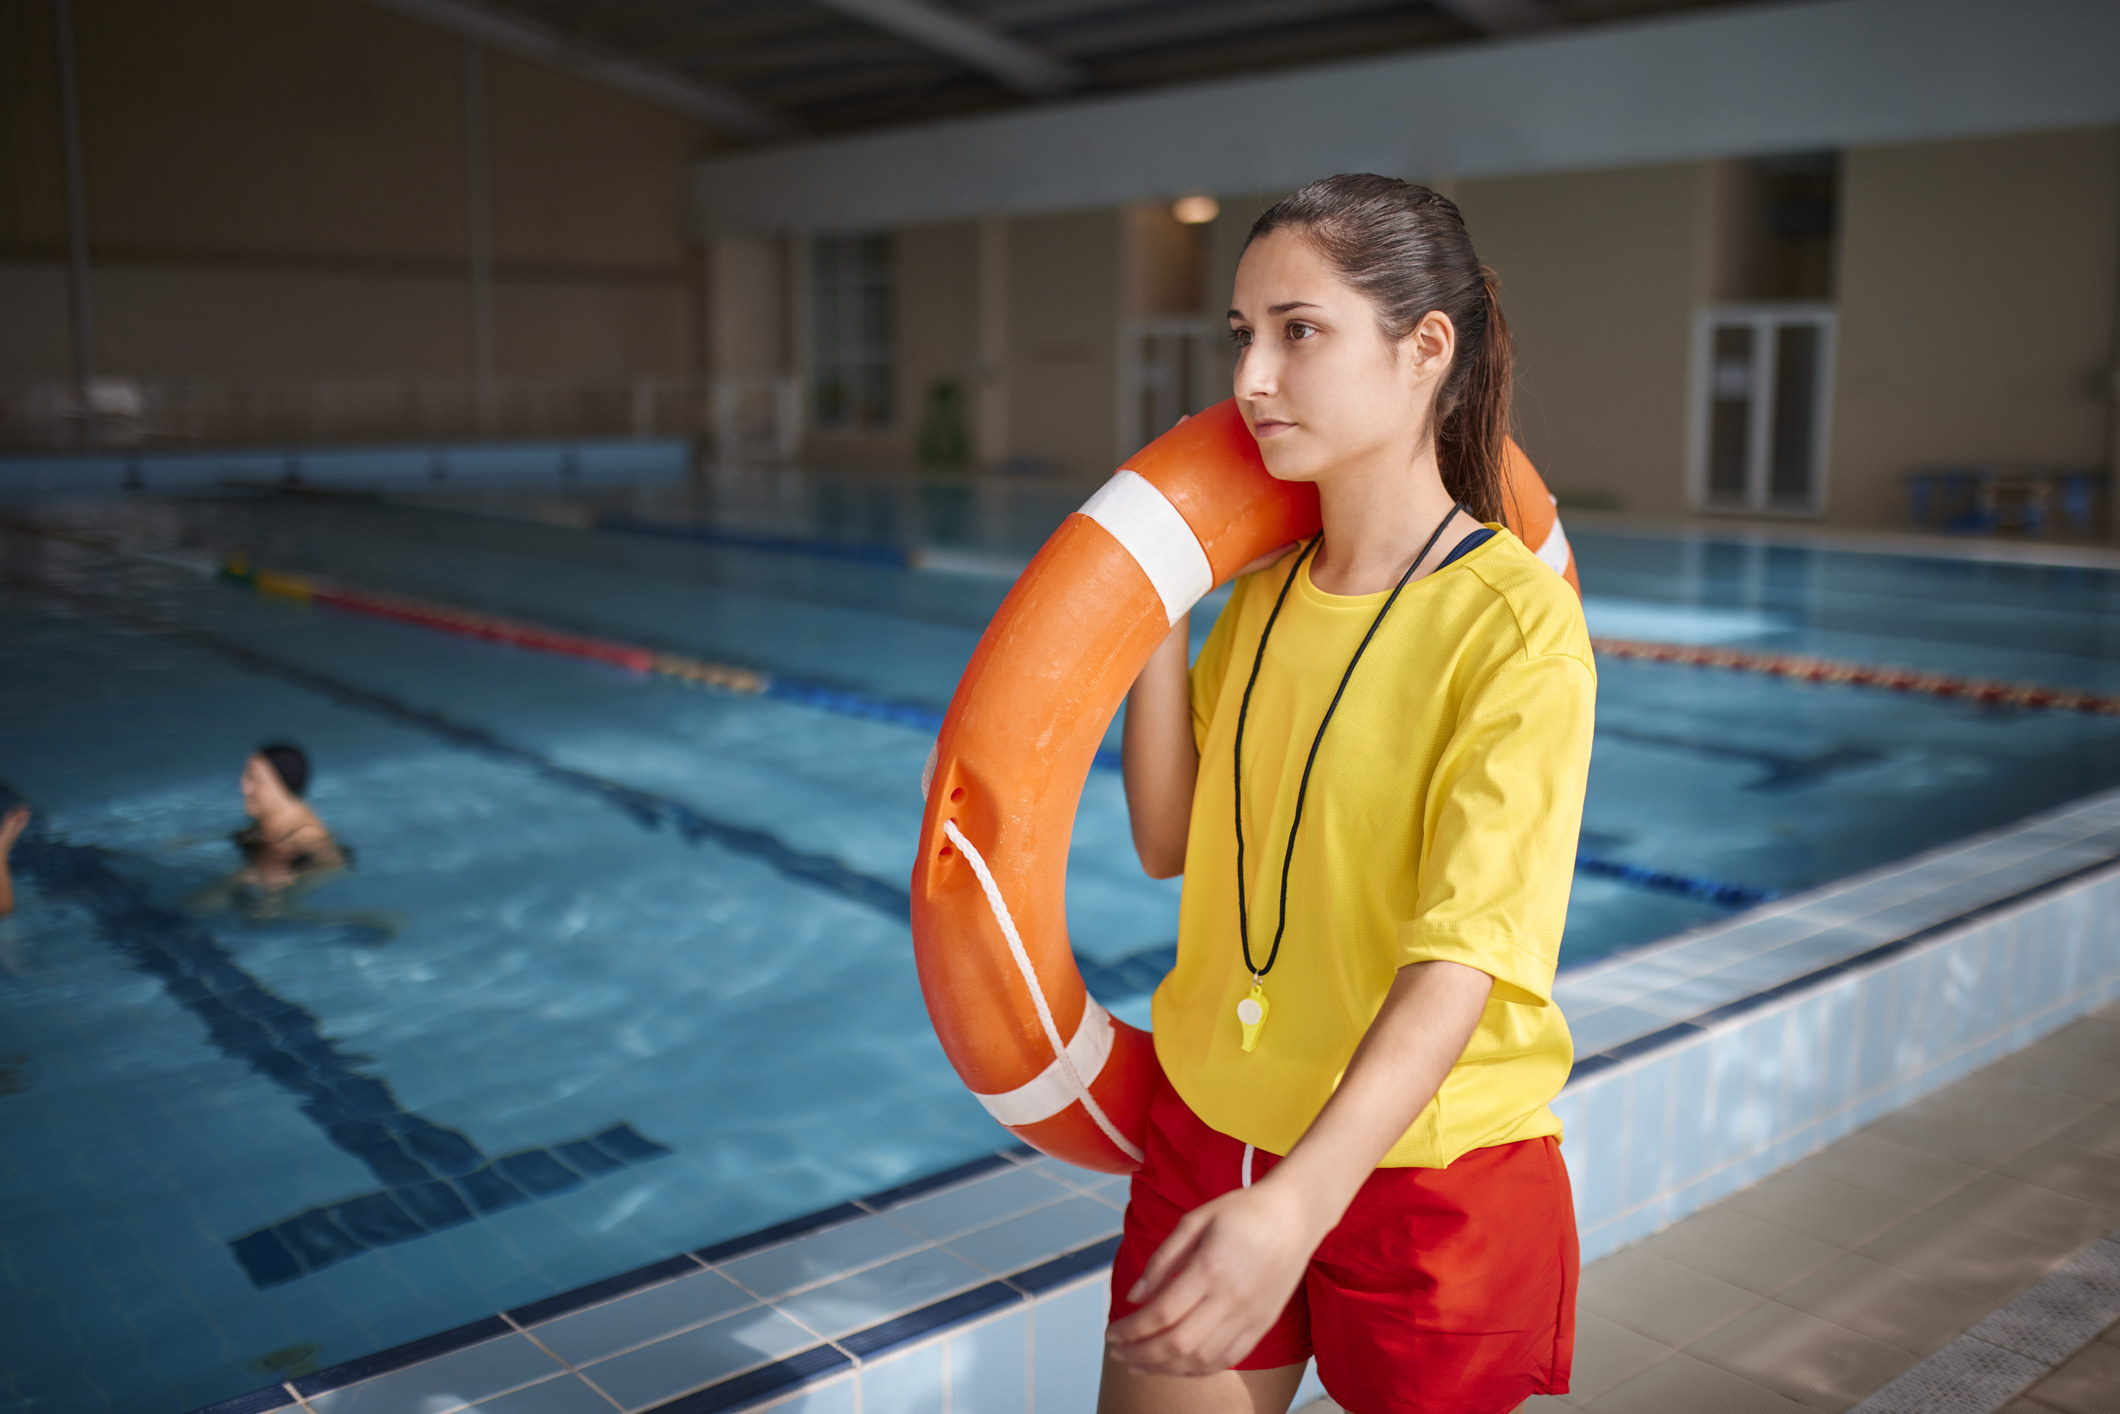 Lifeguard walking around indoor pool